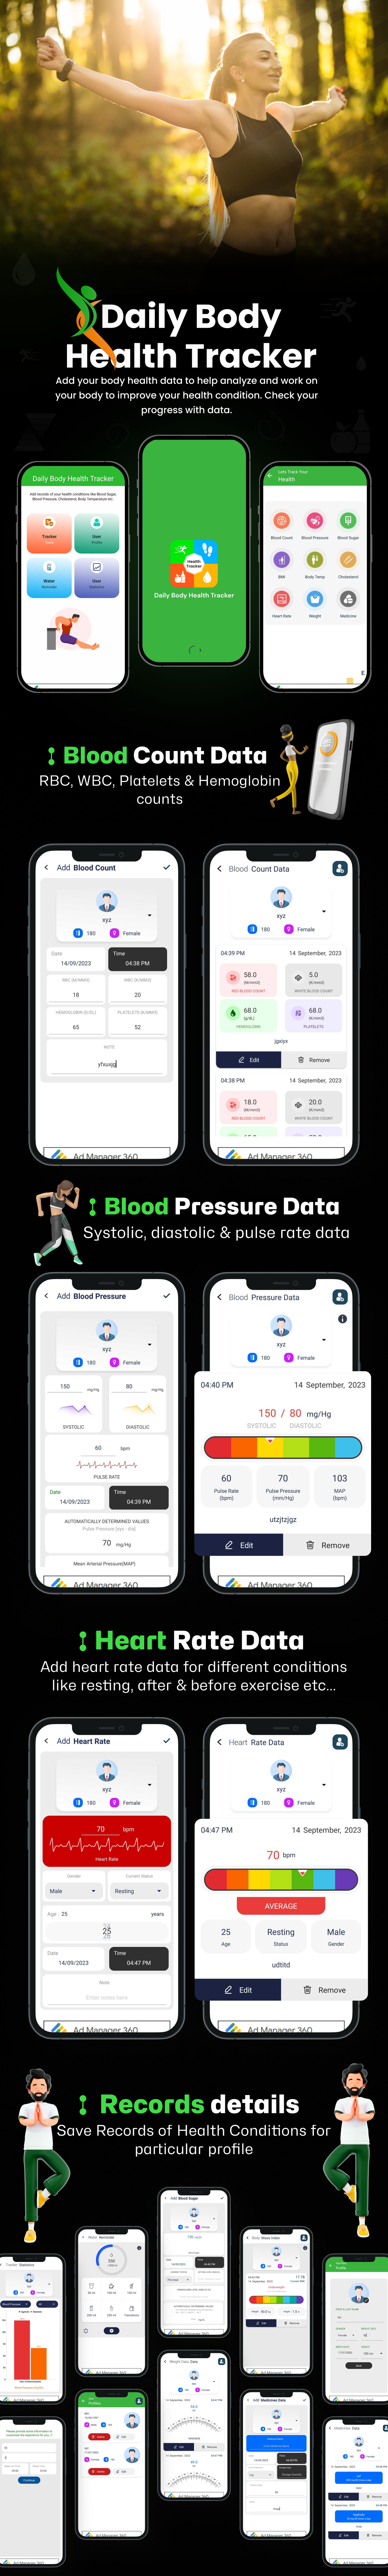 Personal Health Tracker - Daily Body Health tracker - Admob - Android App - 1